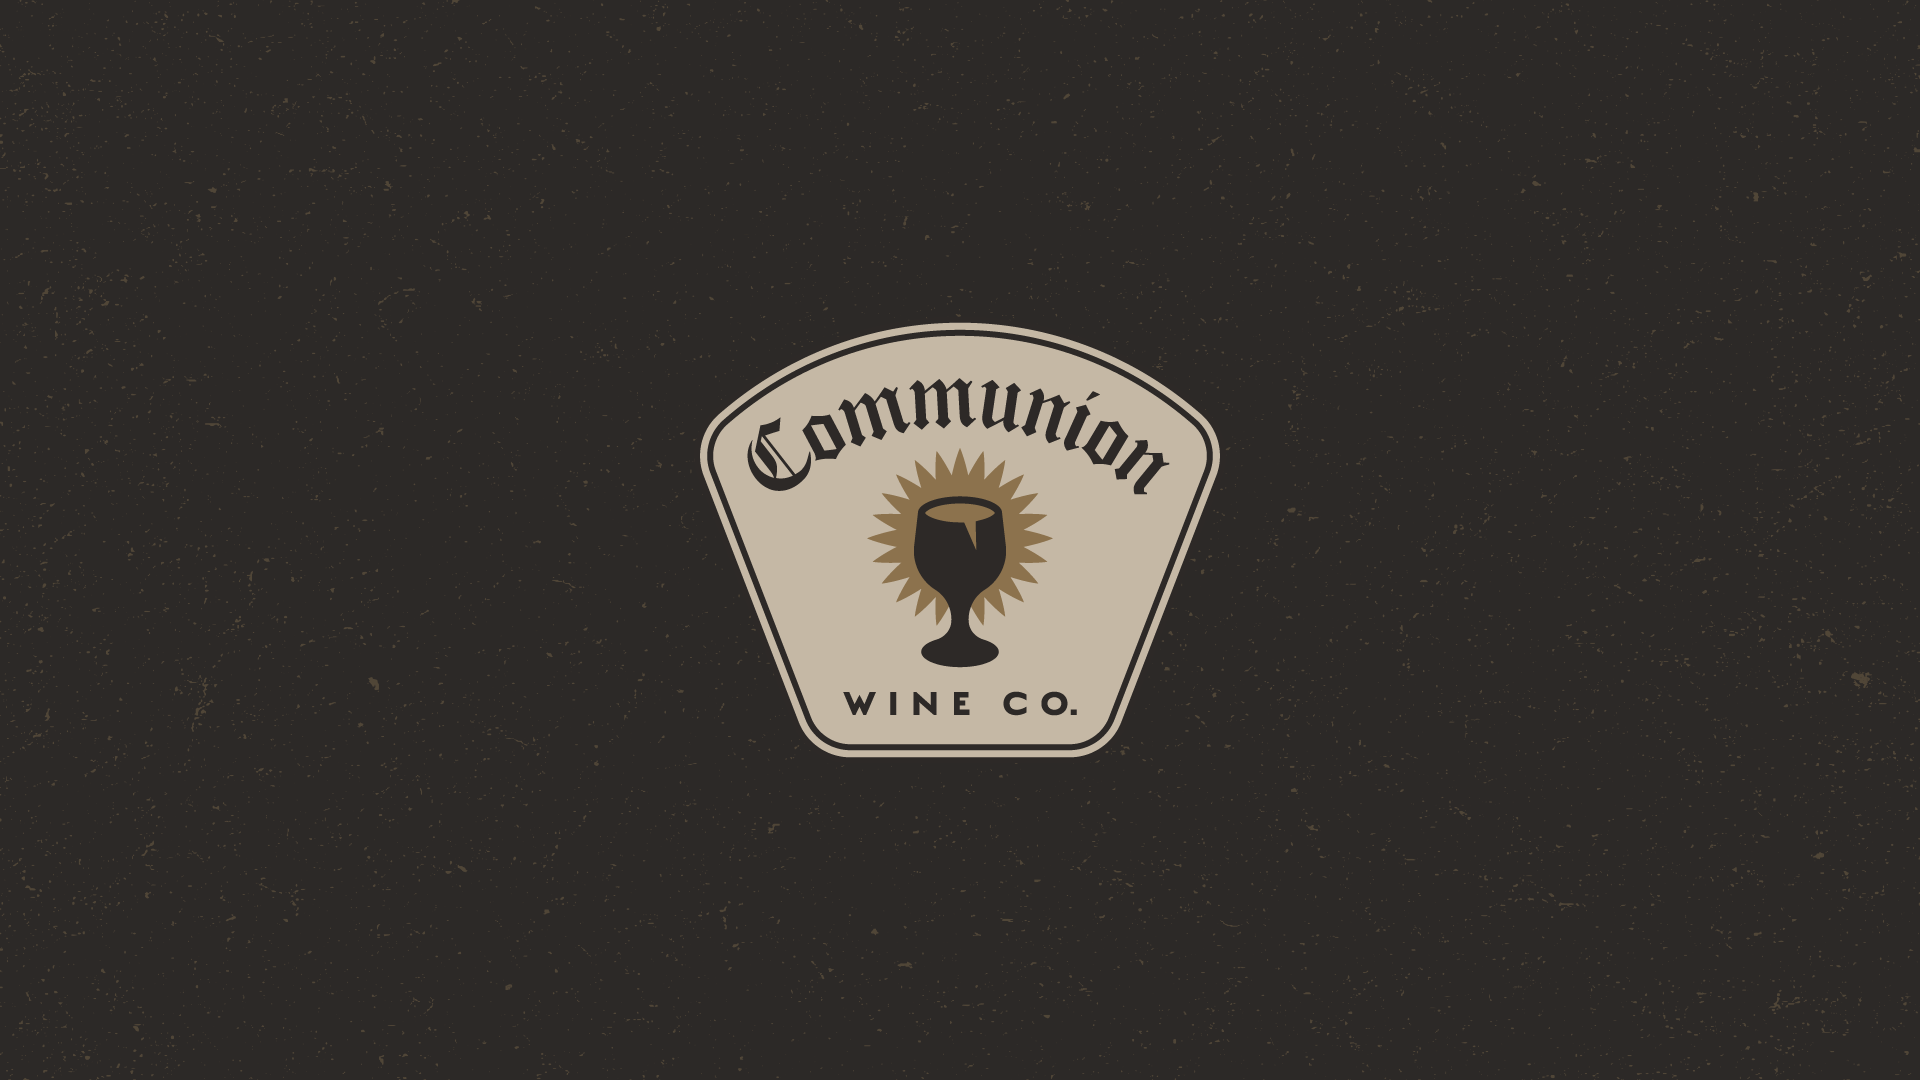 Communion Wine Co.